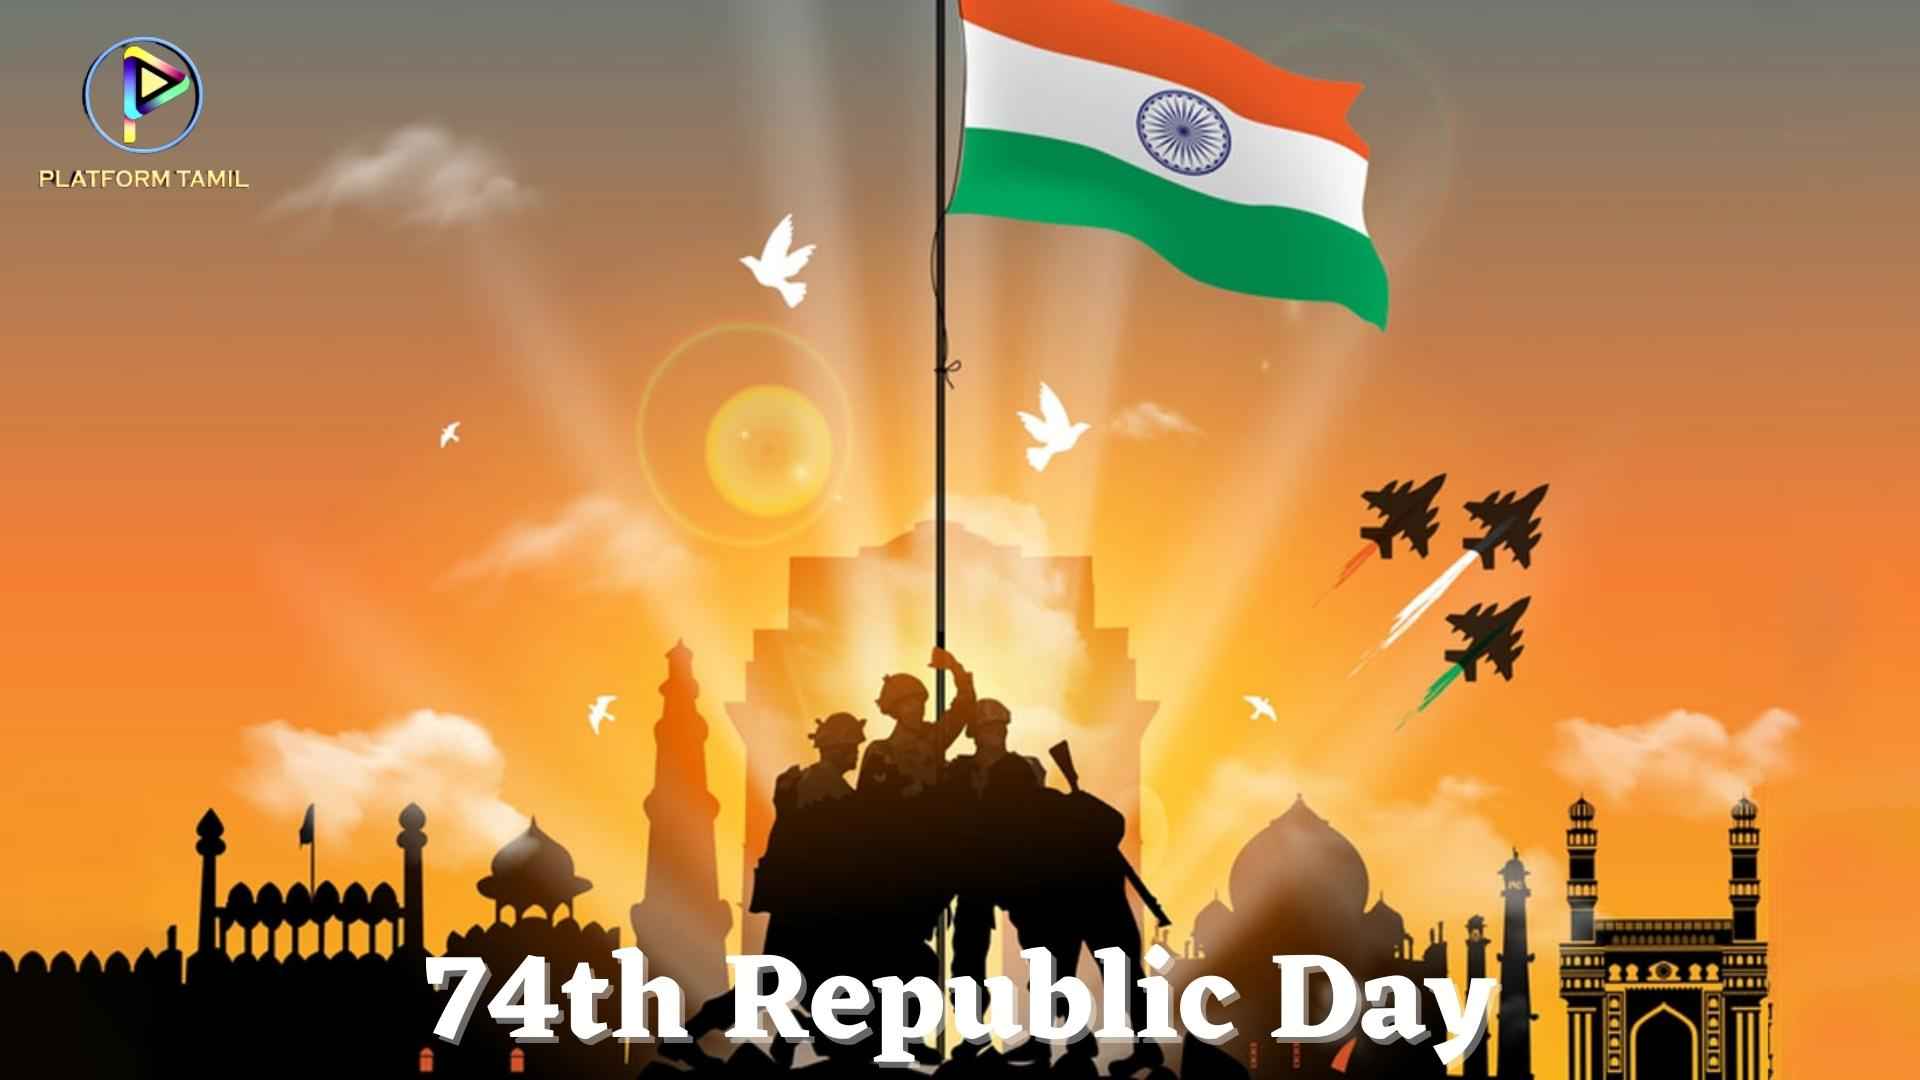 India Republic Day - Platform Tamil